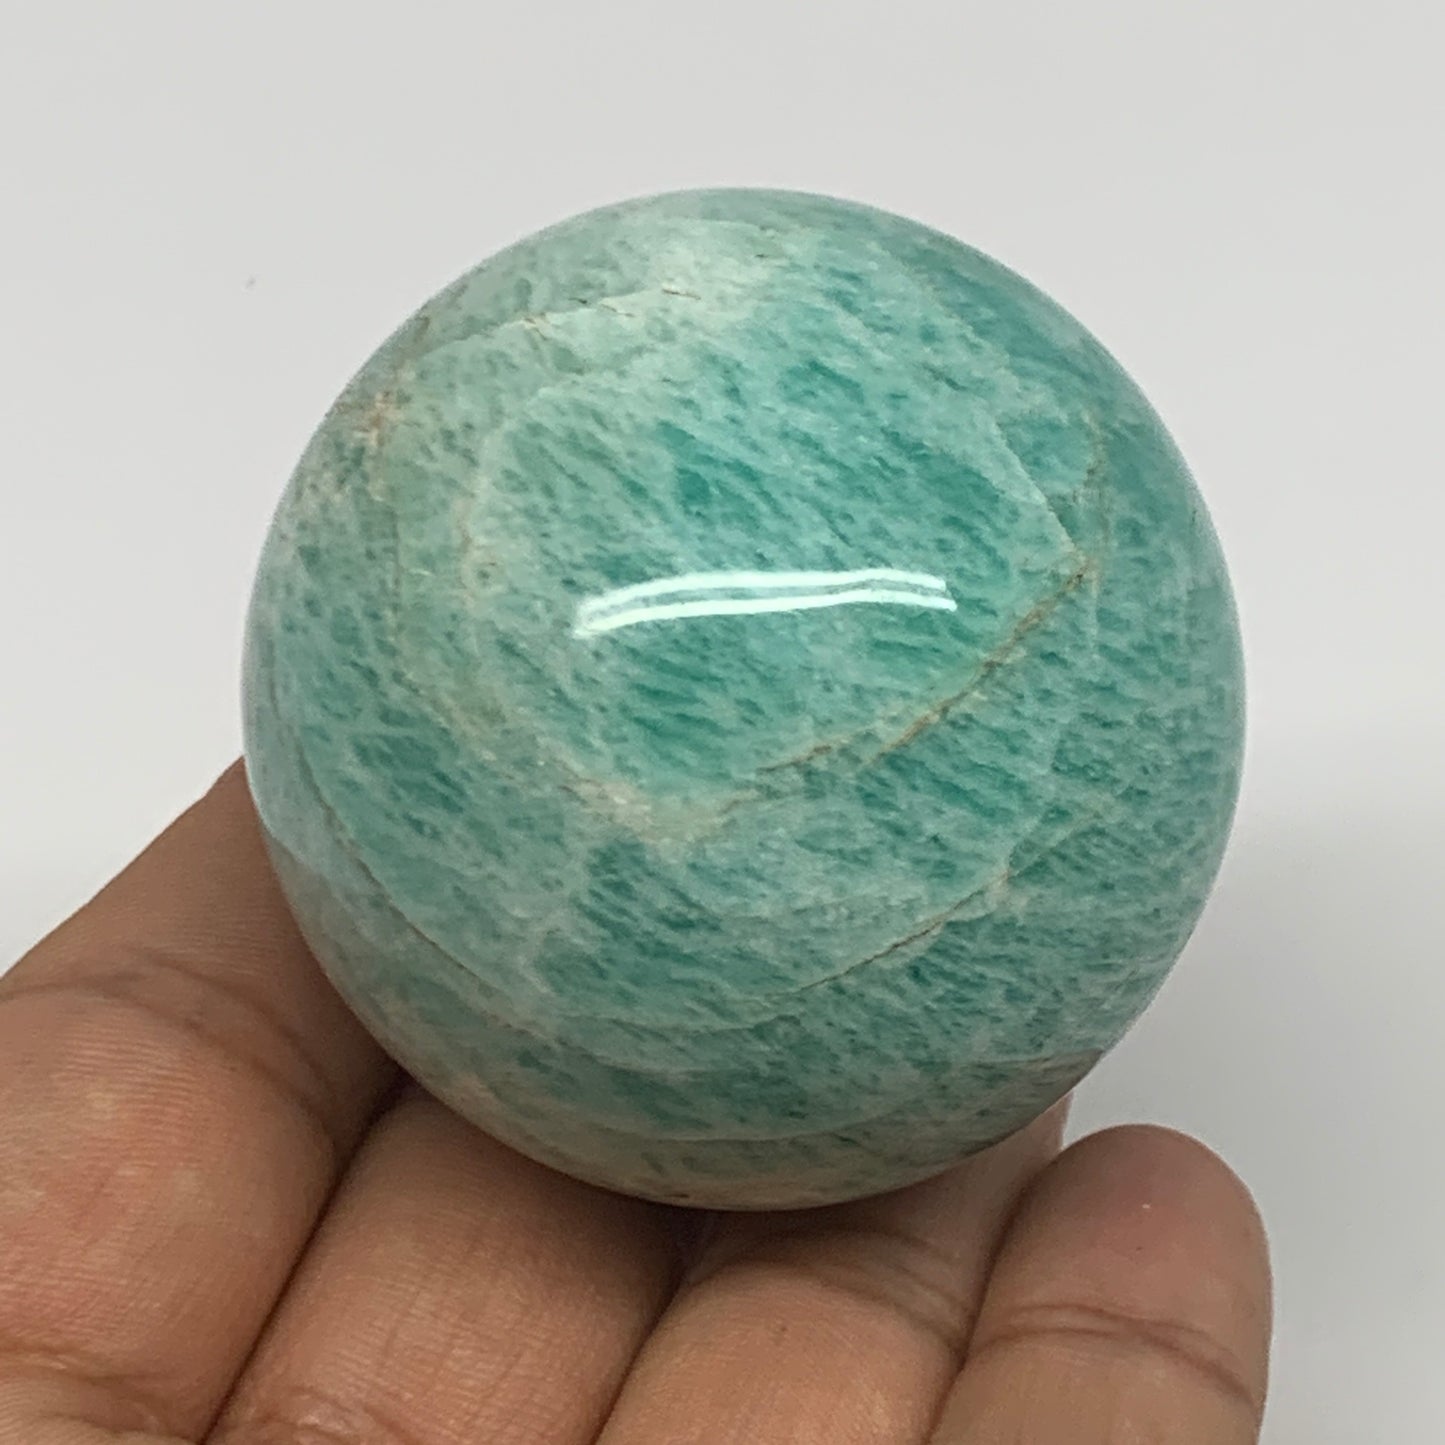 157.6g, 1.9" (49mm), Small Amazonite Sphere Ball Gemstone from Madagascar, B1578